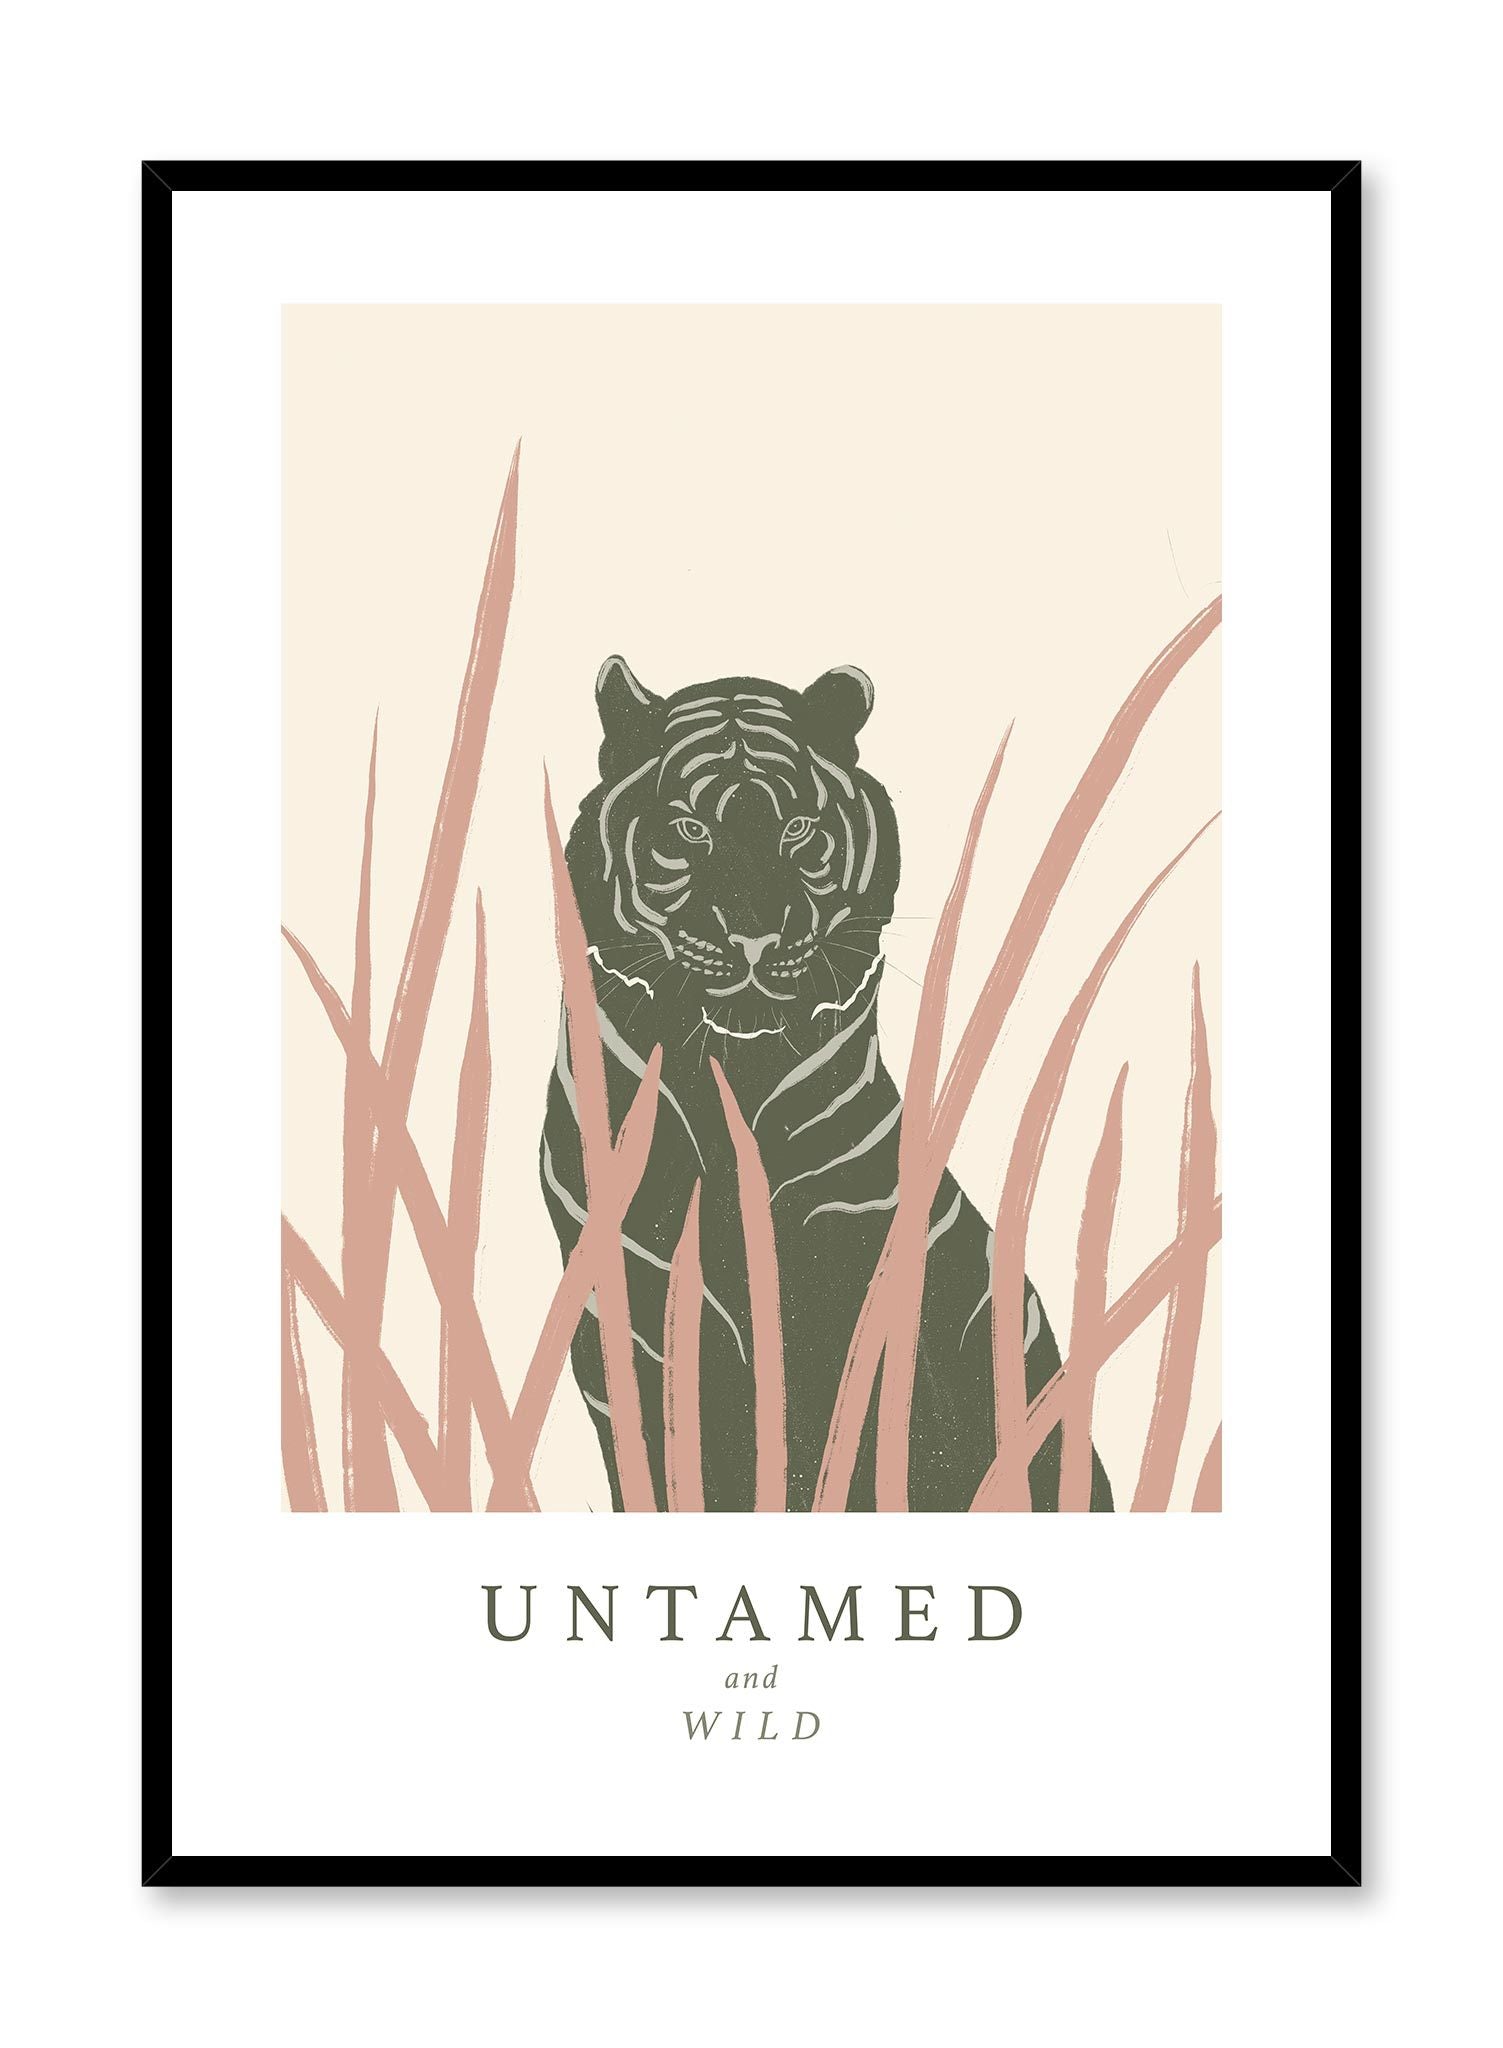 Pouncing Tiger Poster Print